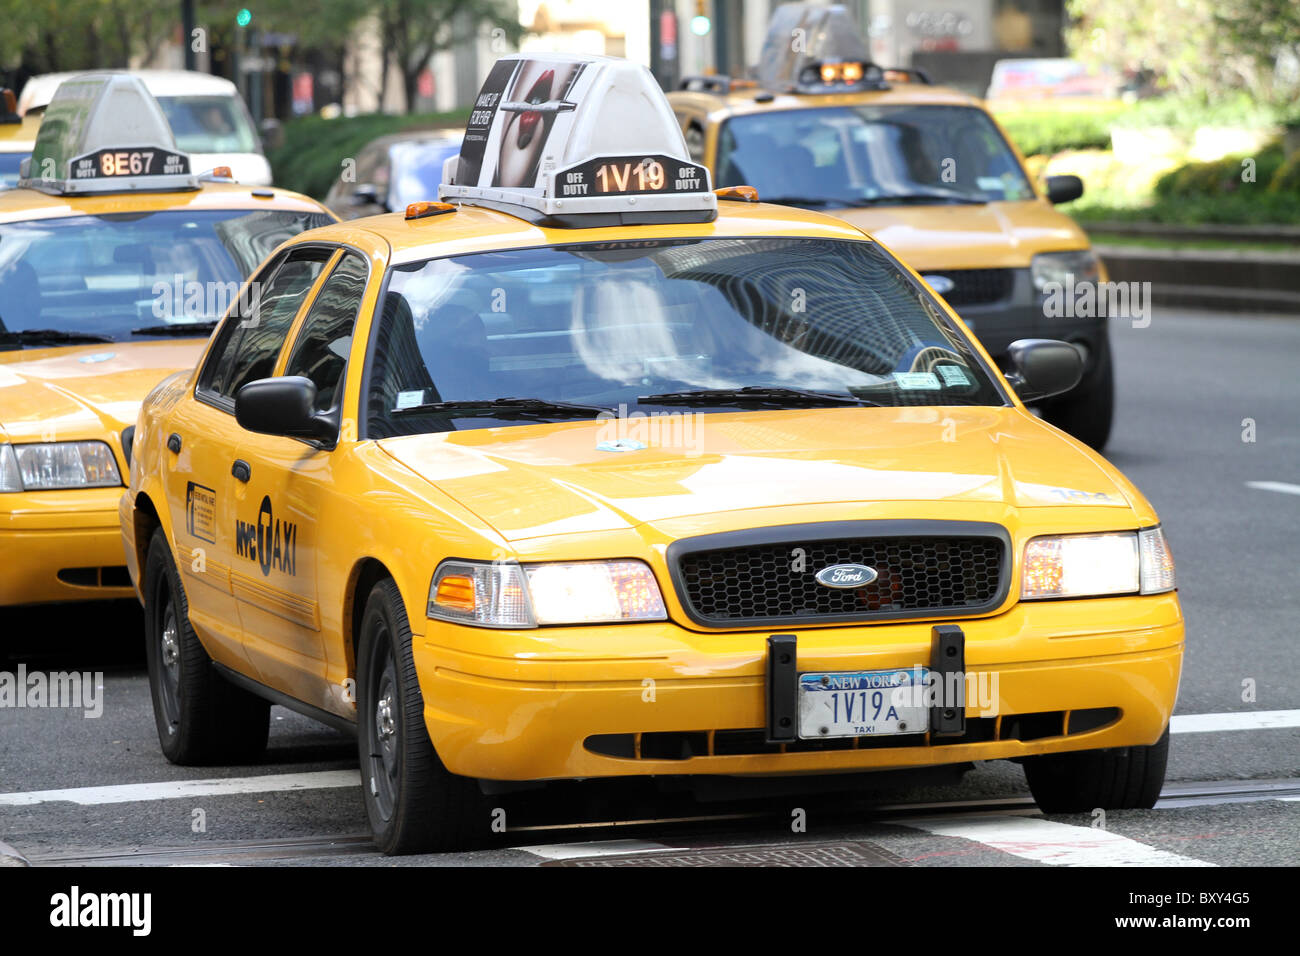 Gelben New York NYC Taxi Taxi in New York, Amerika Stockfotografie - Alamy